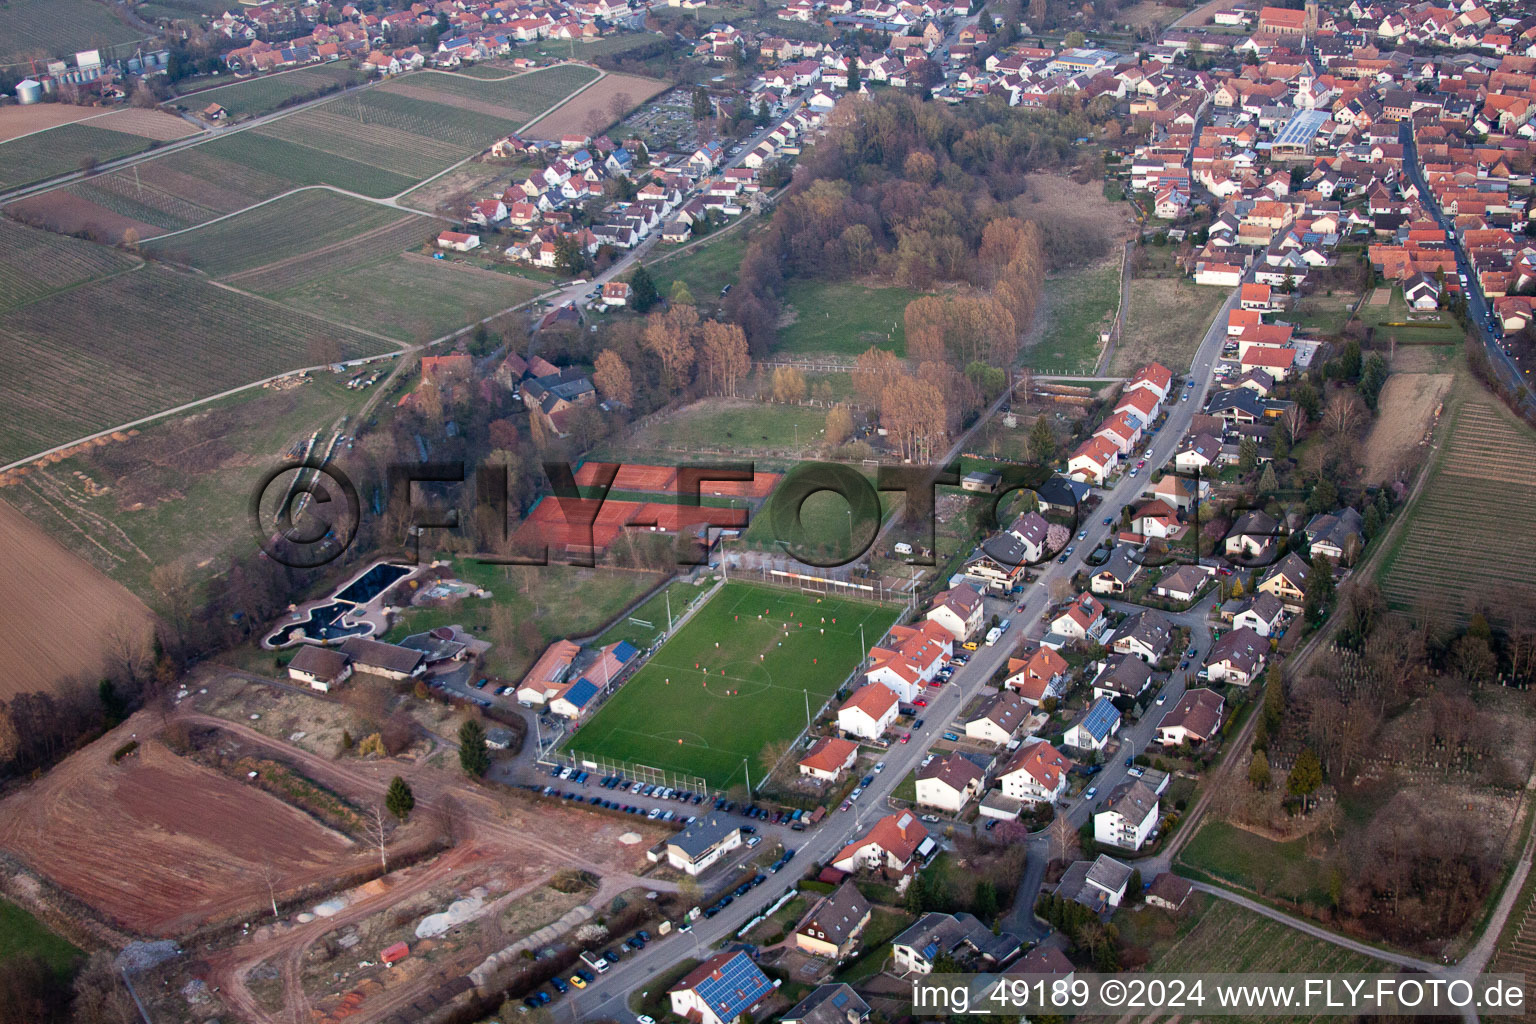 Drone image of Sports fields in the district Ingenheim in Billigheim-Ingenheim in the state Rhineland-Palatinate, Germany